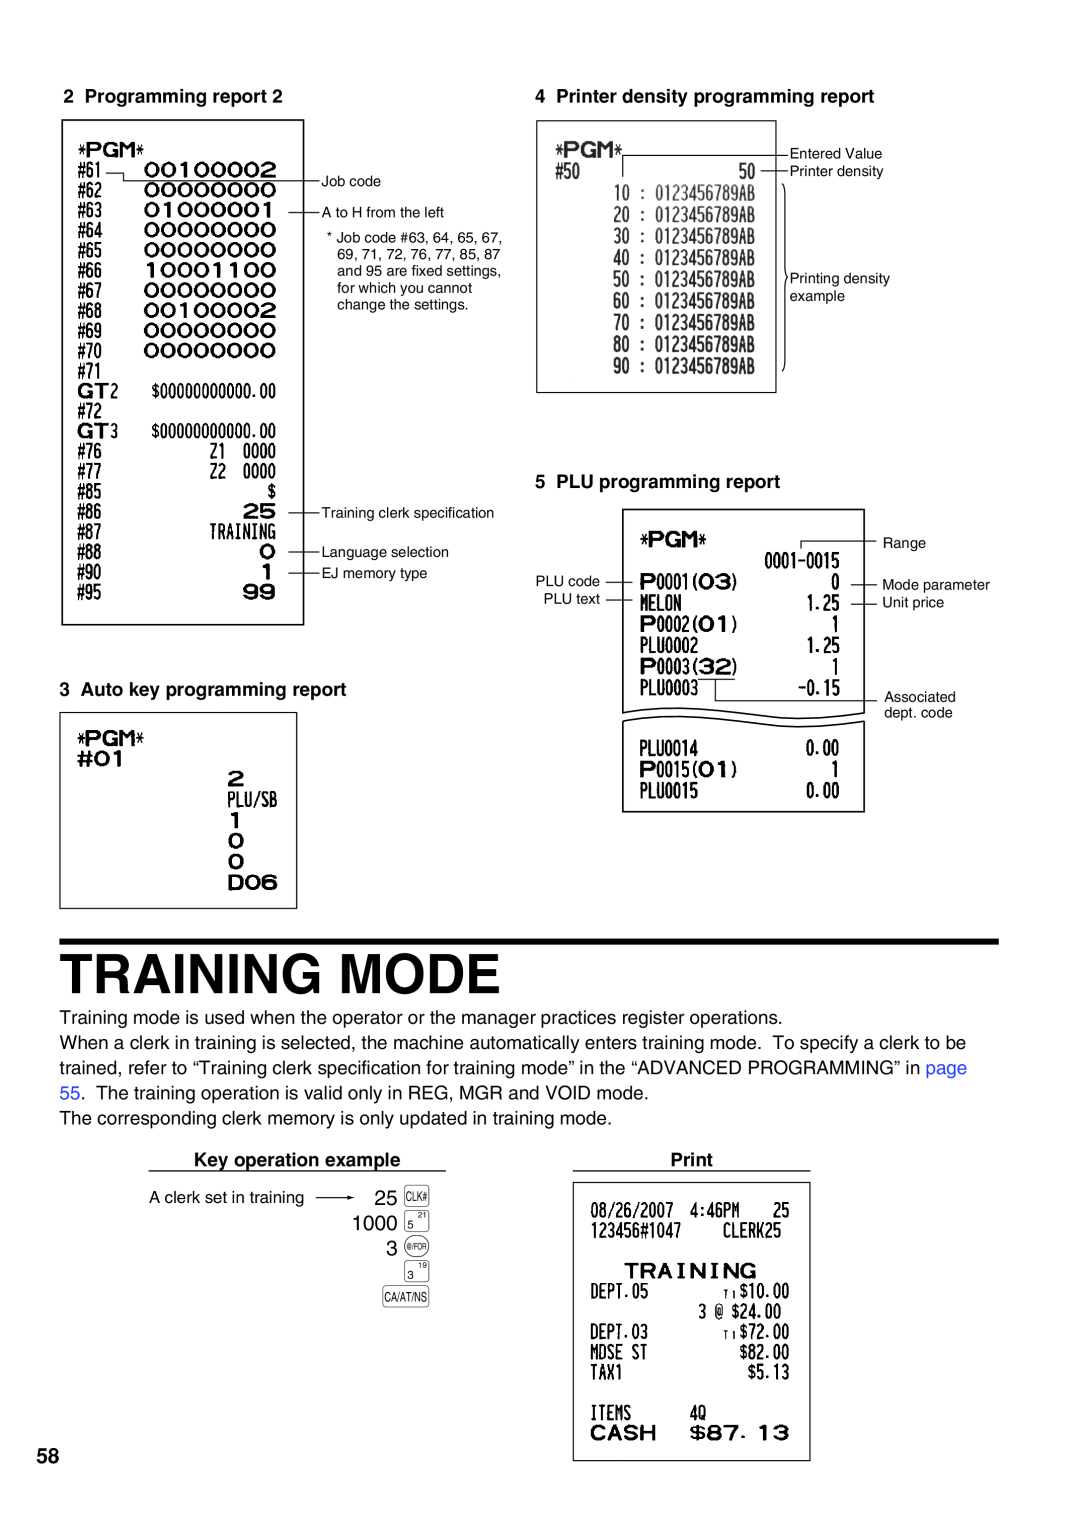 Sharp XE-A21S Training Mode, 3 @ # A, 1000, Programming report, Printer density programming report, PLU programming report 